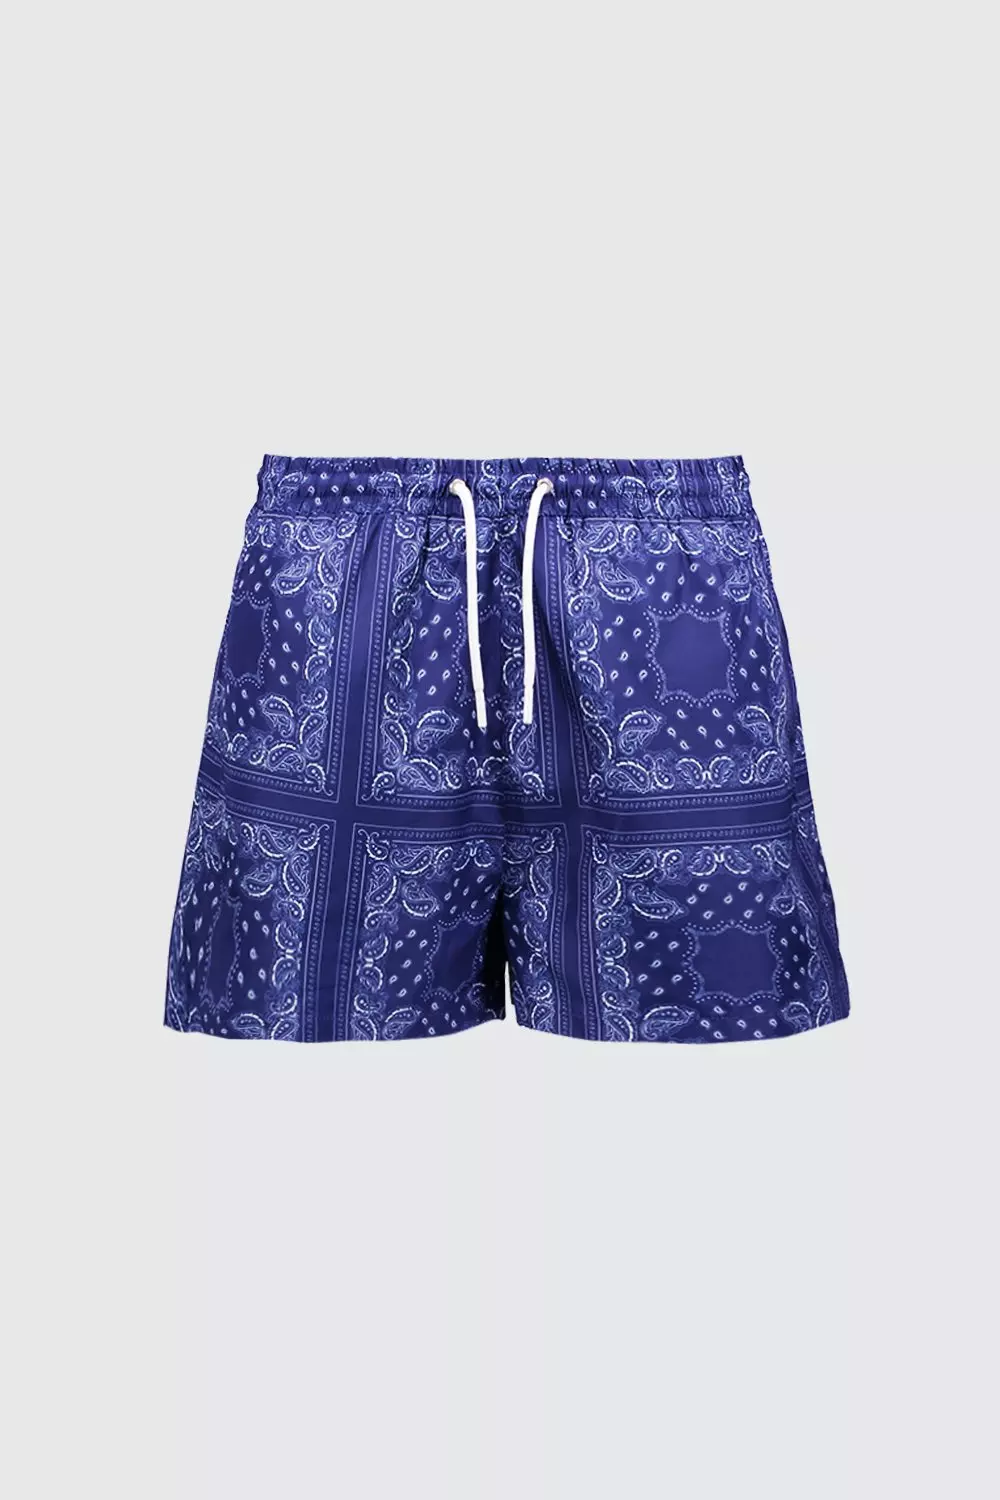 Blue Bandana Shorts 7